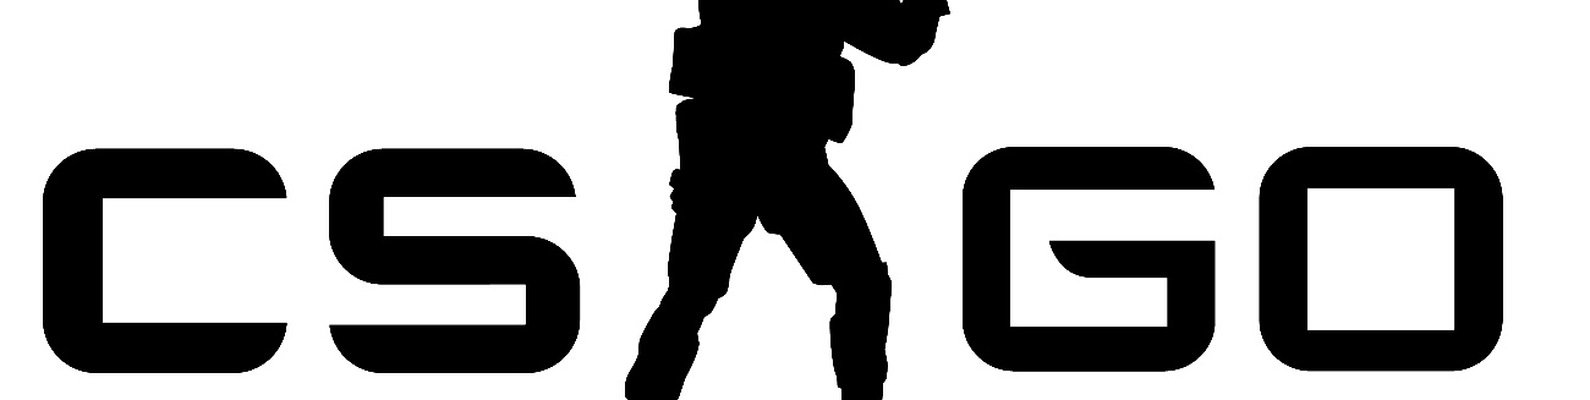 Гоу т. CS go логотип PNG. КС надпись. КС го надпись. Counter-Strike: Global Offensive надпись.